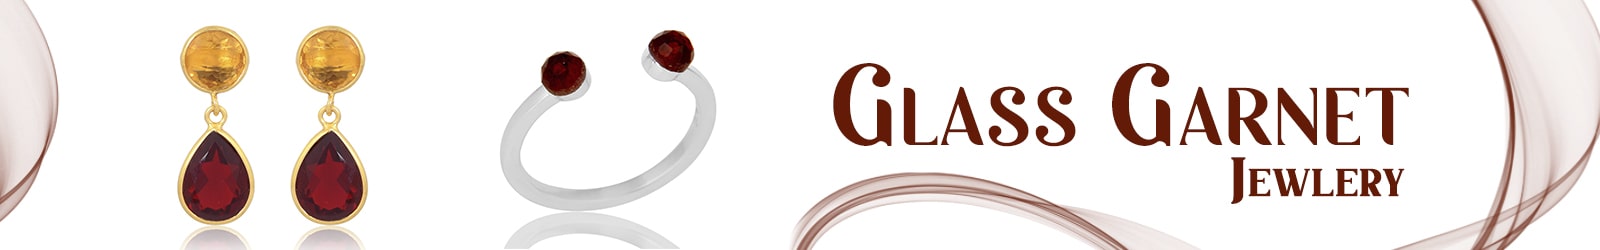 Silver Glass Garnet Jewelry Wholesale Supplier